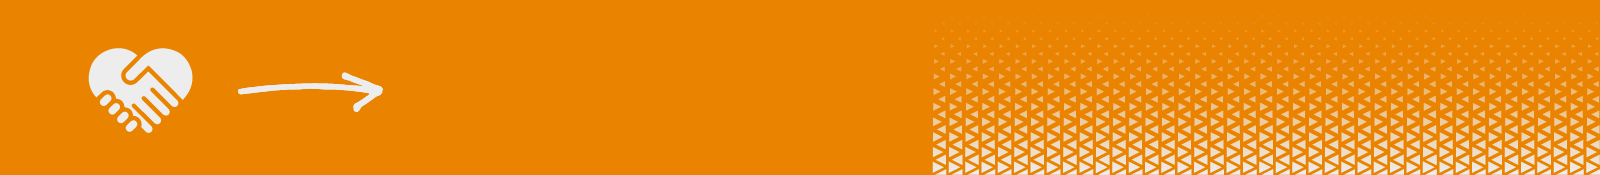 Banner in orange blue with handshake icon 